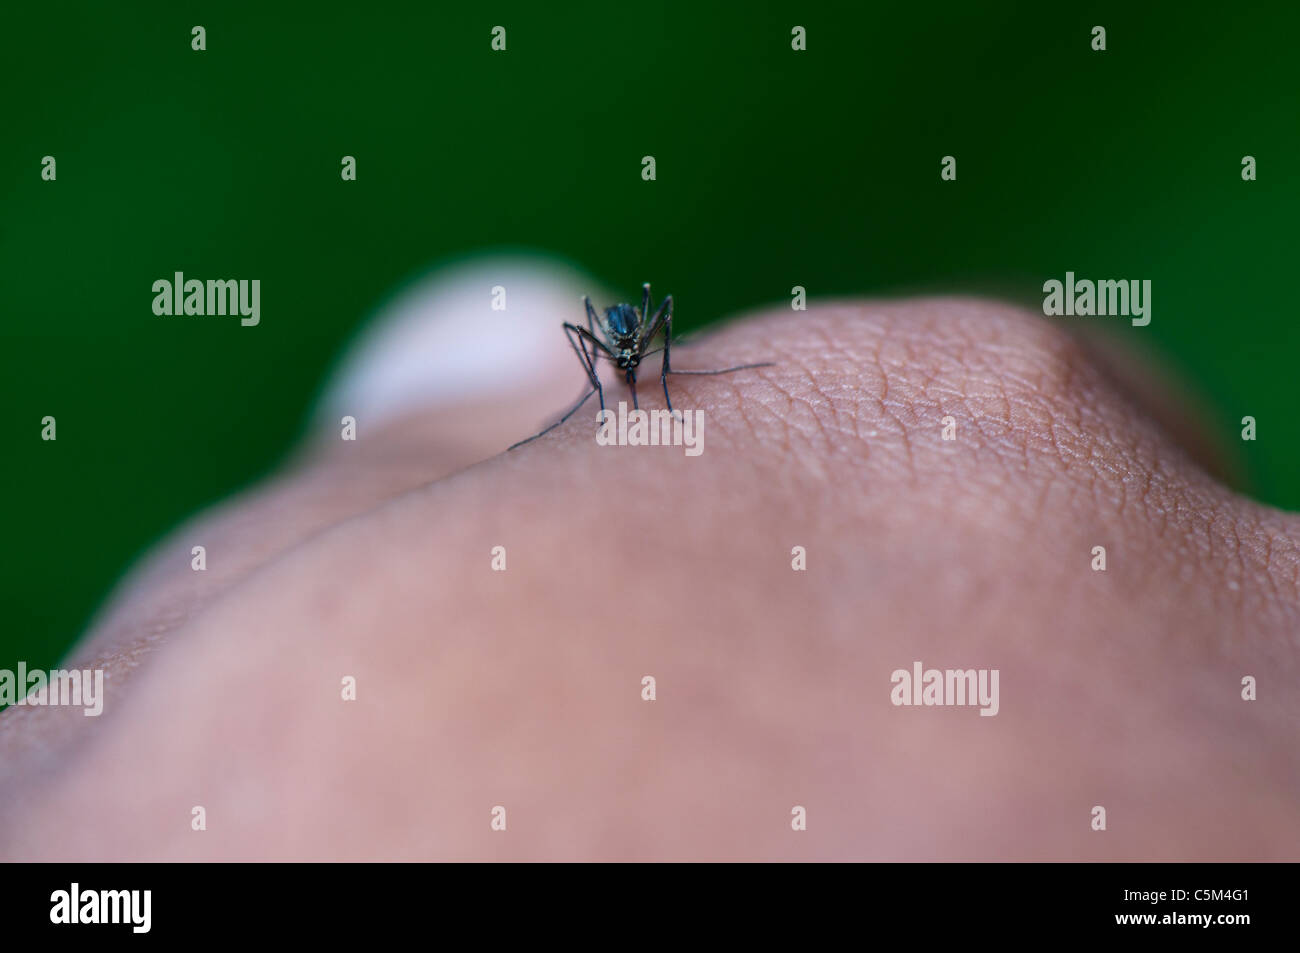 Mosquito biting on hand, feeding on human blood Stock Photo